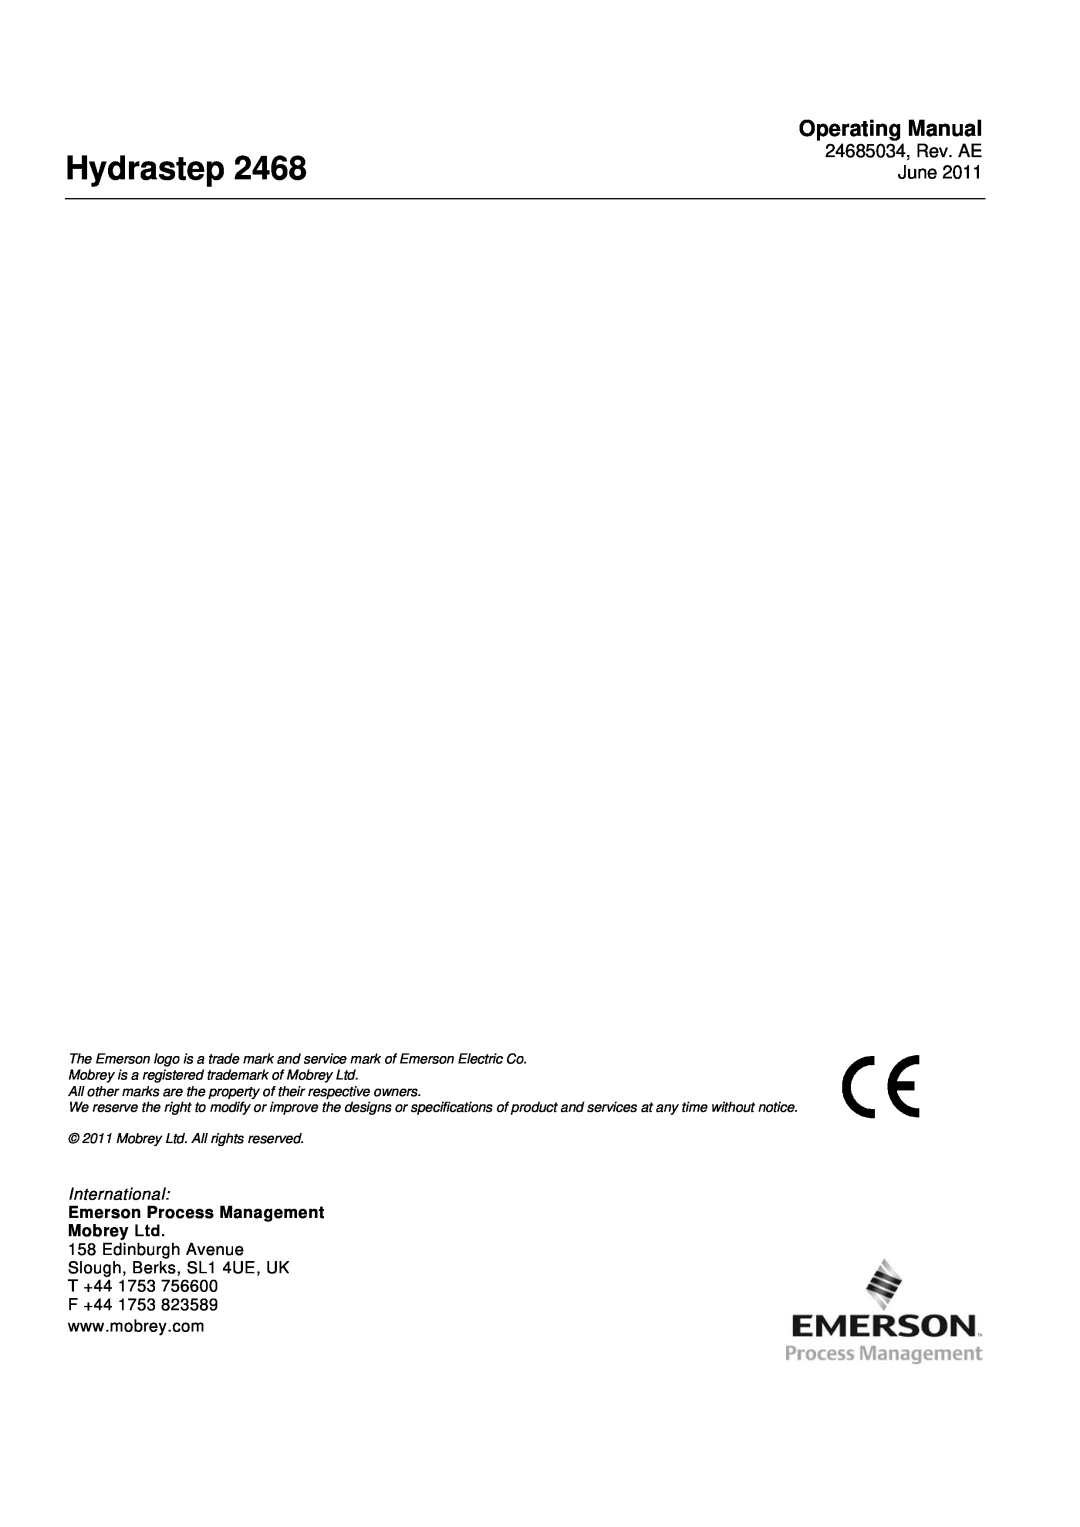 Emerson 2468CB, 2468CD manual Hydrastep, Operating Manual, Emerson Process Management Mobrey Ltd 